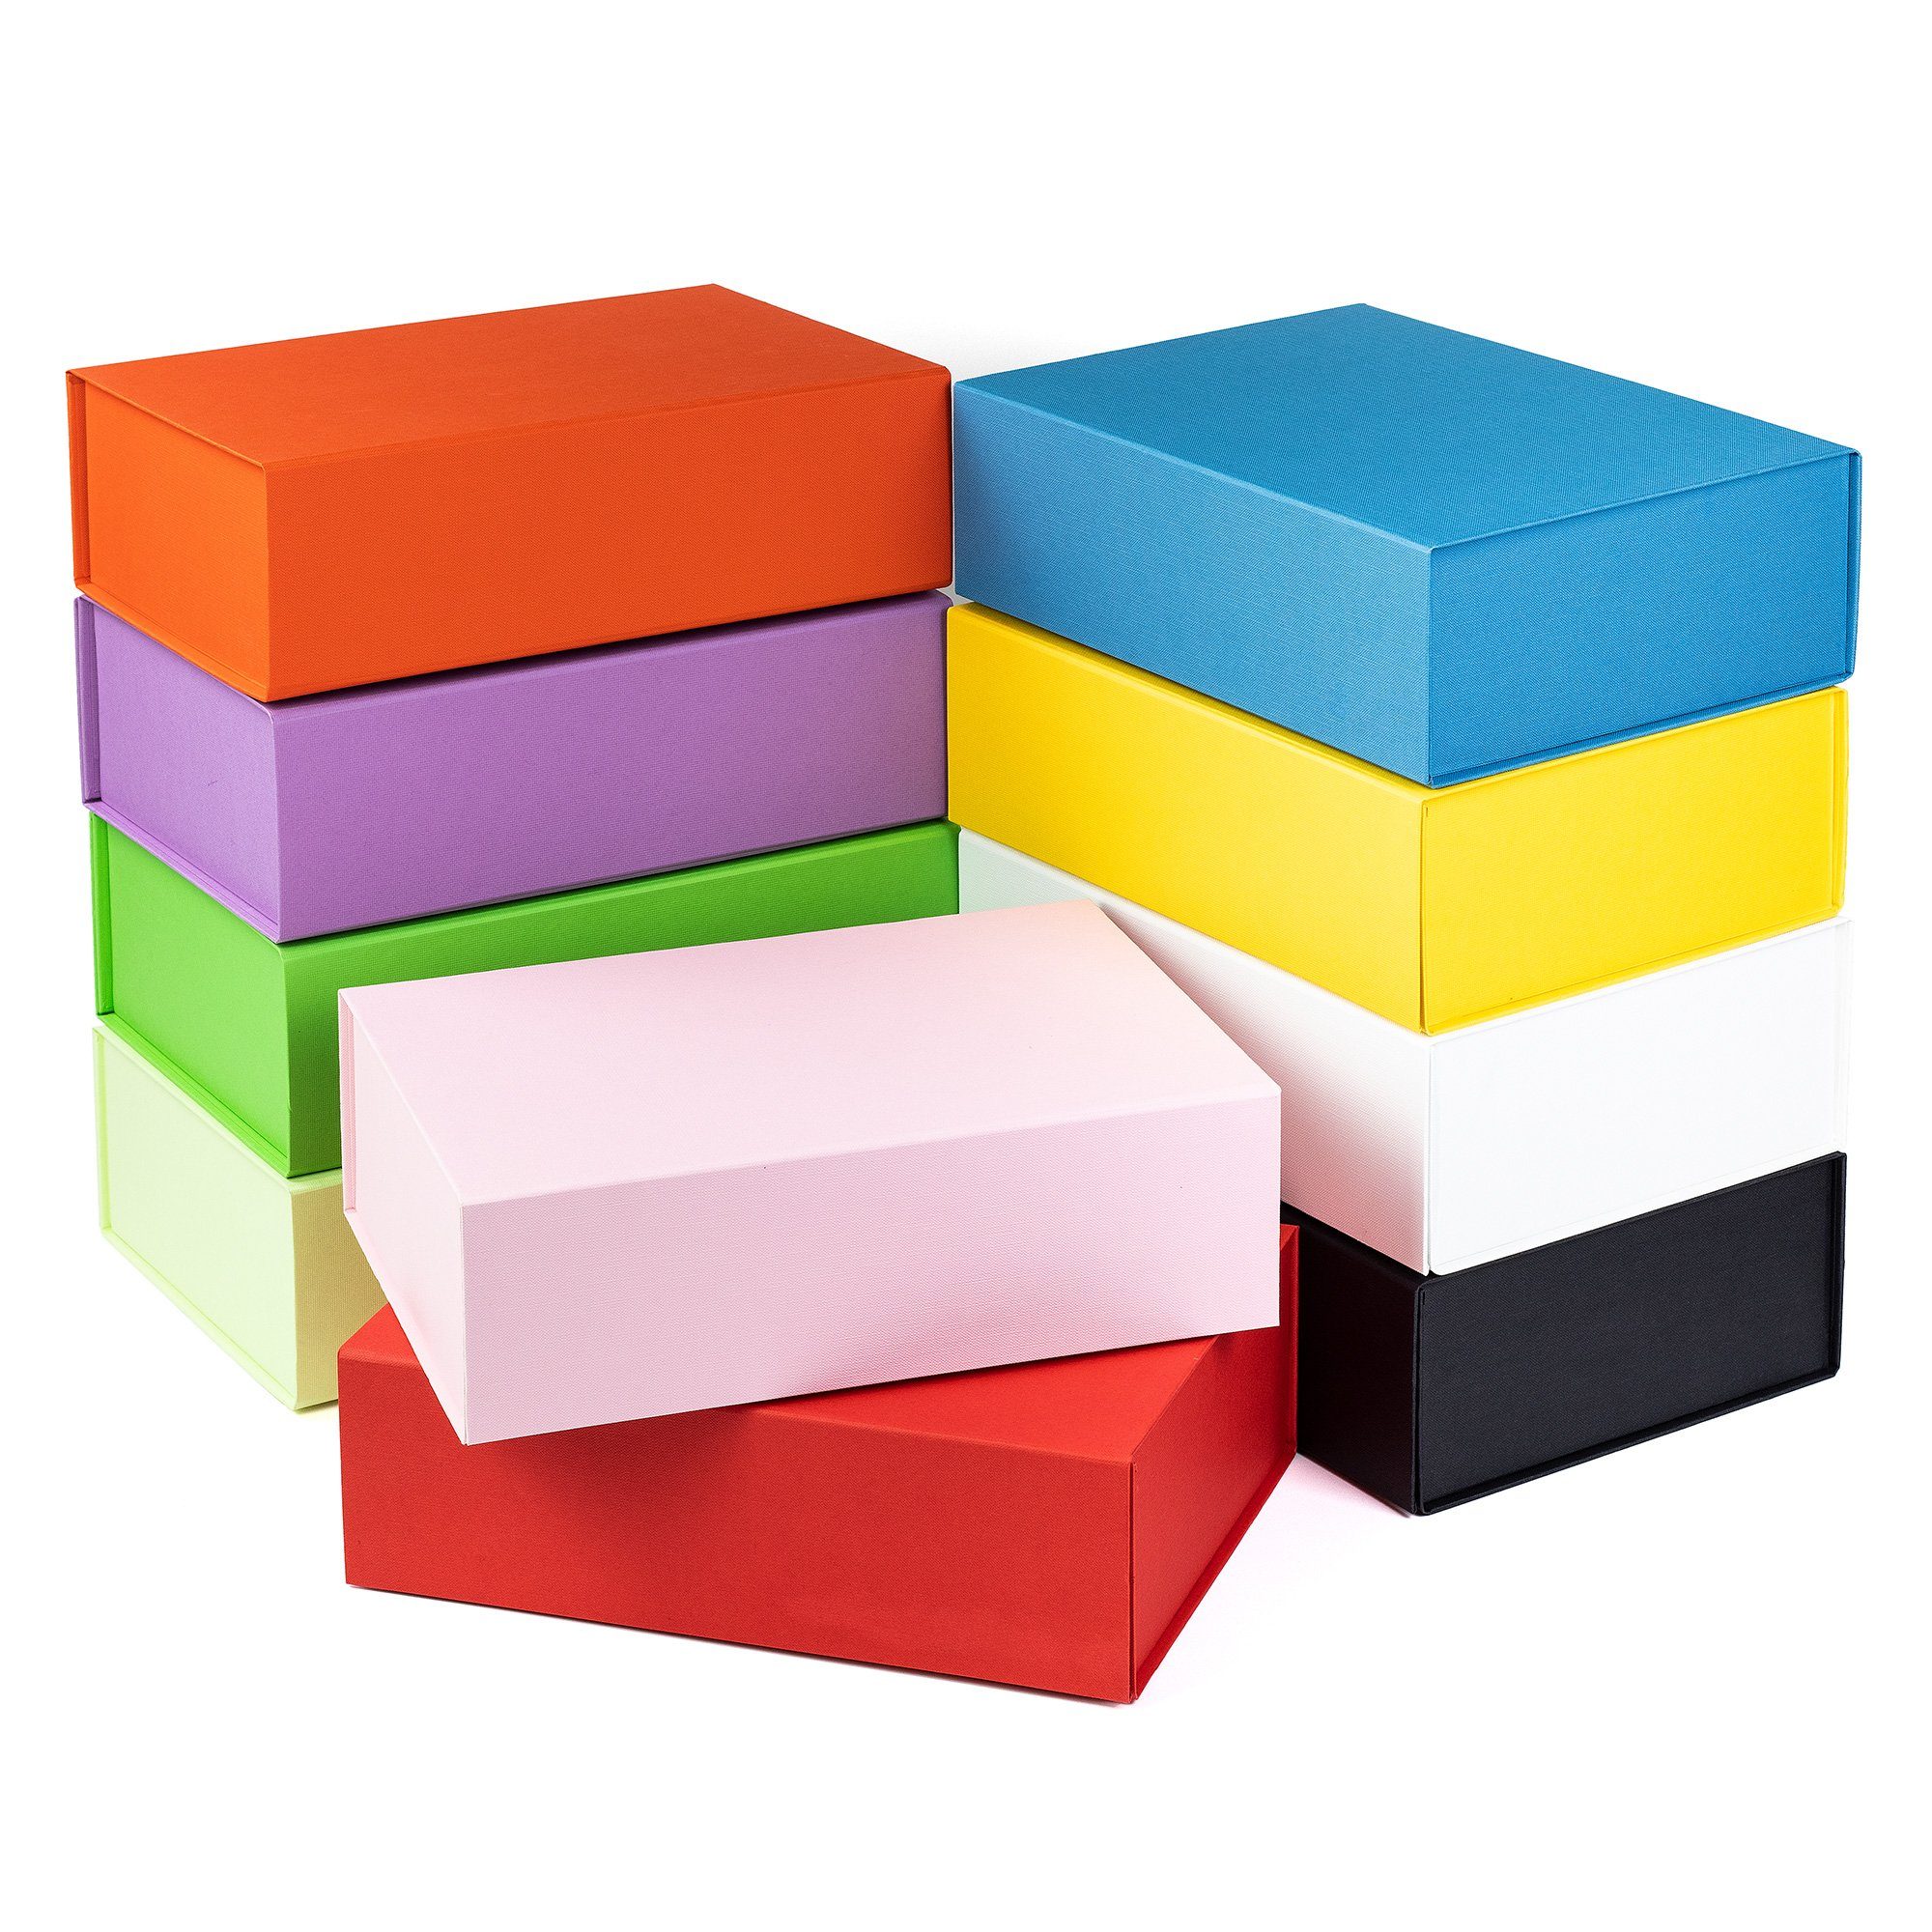 AdelDream Aufbewahrungsbox Gift Box, Magnetic Gift Box, Reusable Decorative Box ZehnFarben